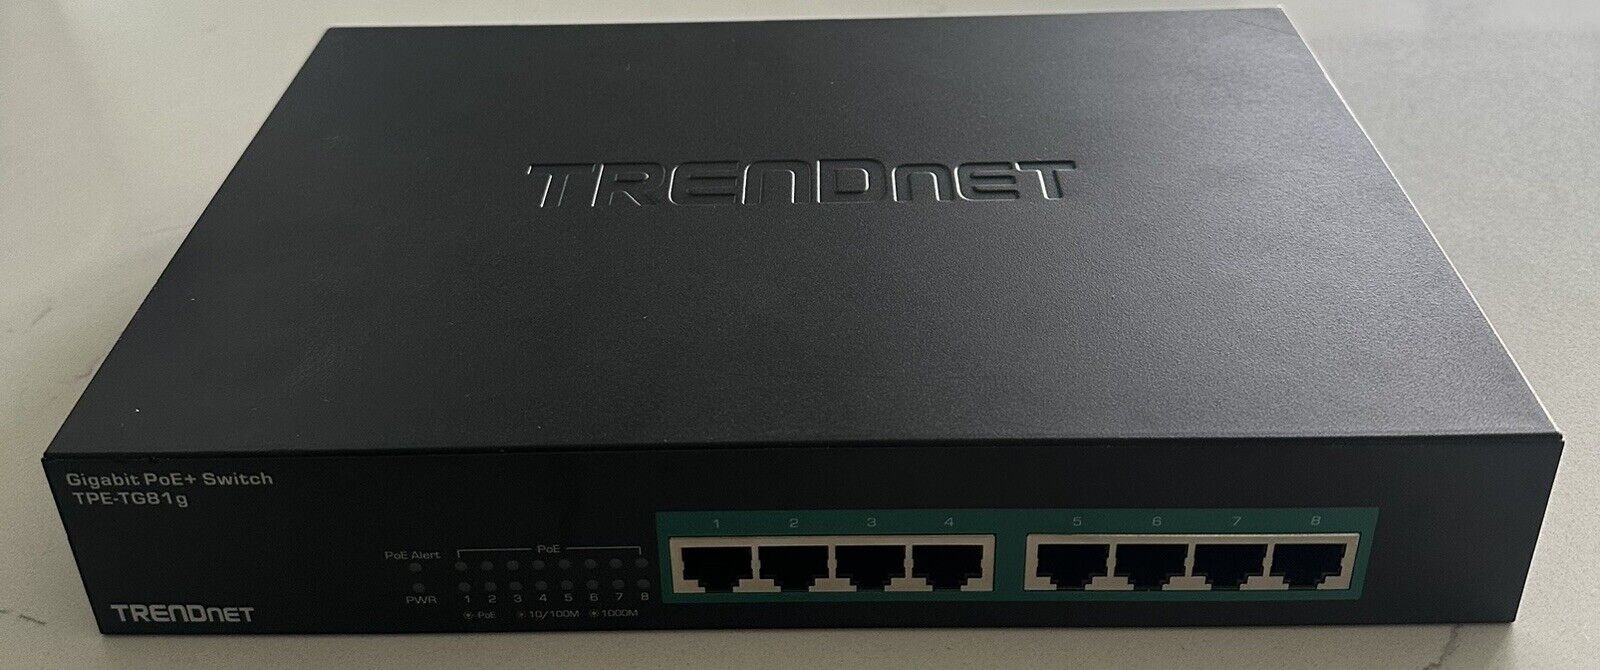 TrendNet TPE-TG81g/A POE+ Gigabit Ethernet Switch 100W